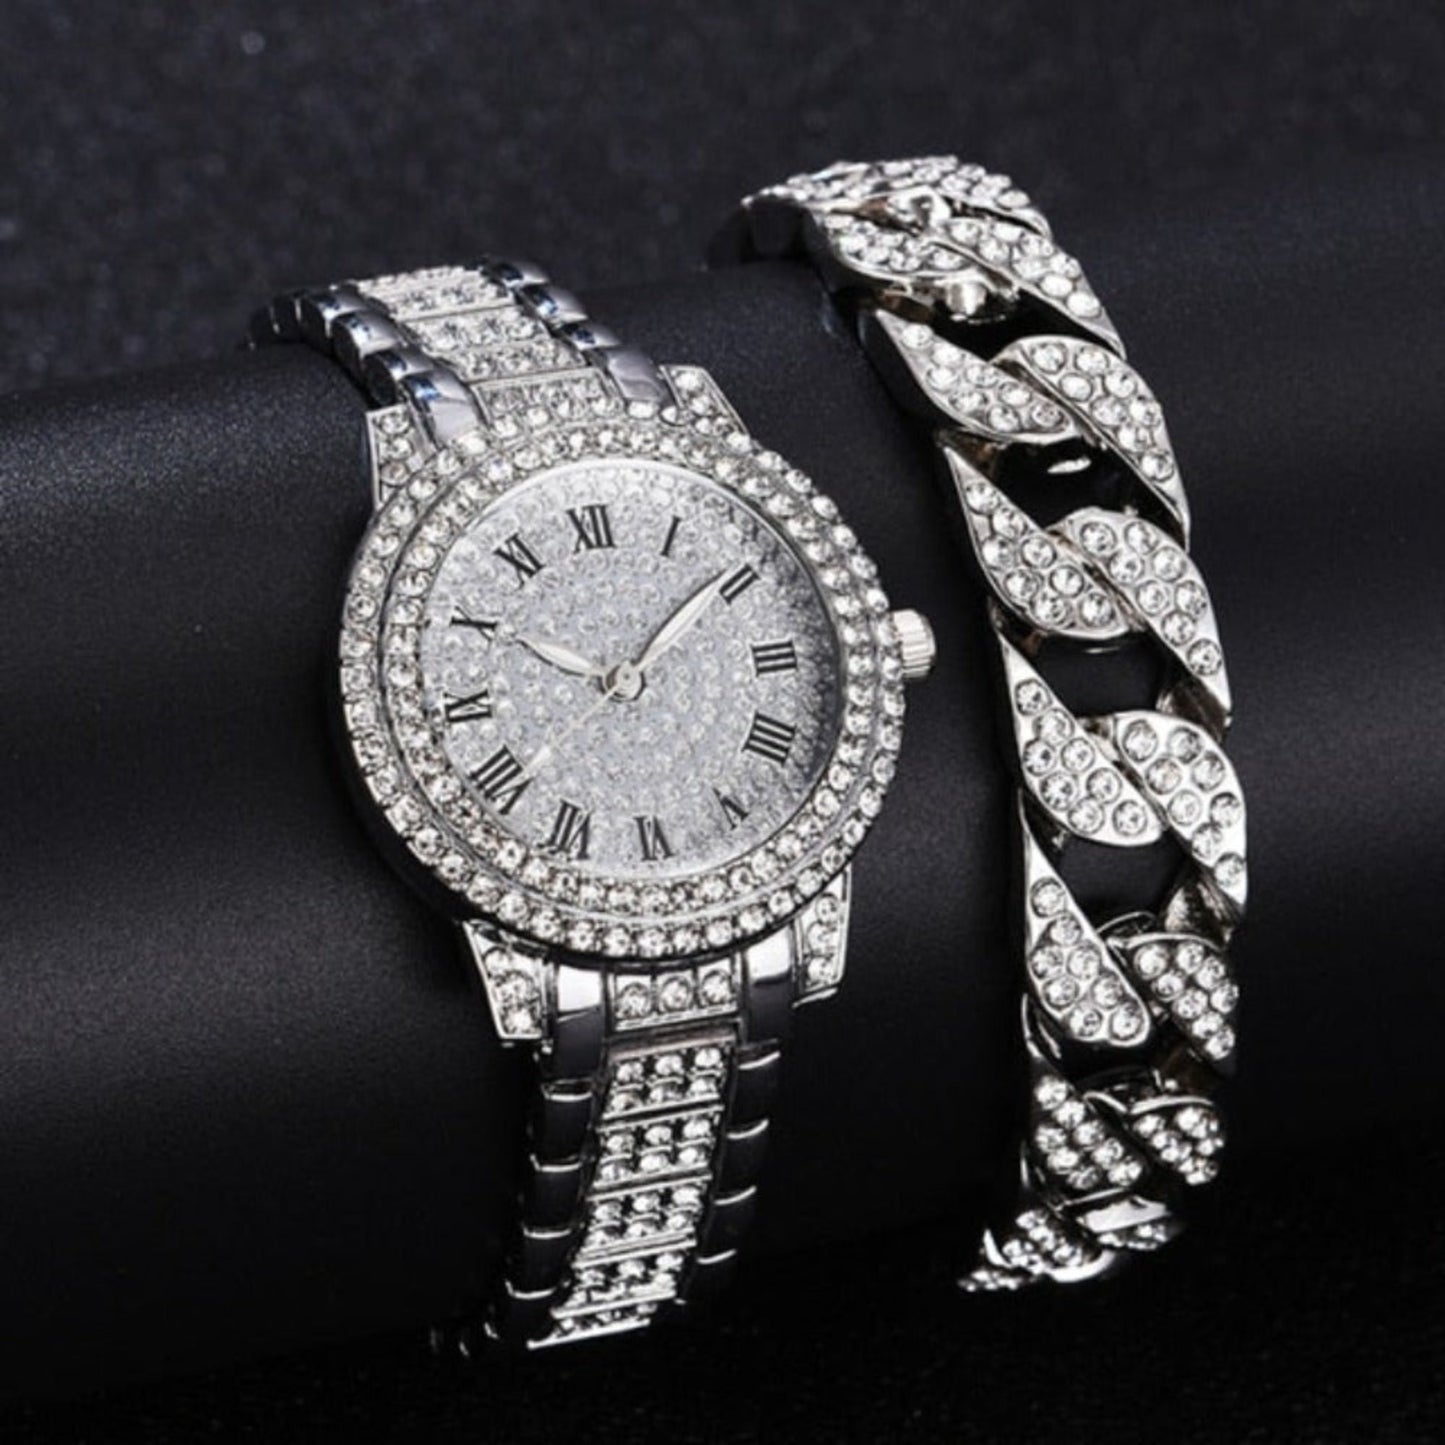 Diamond Watch and Bracelet for Women